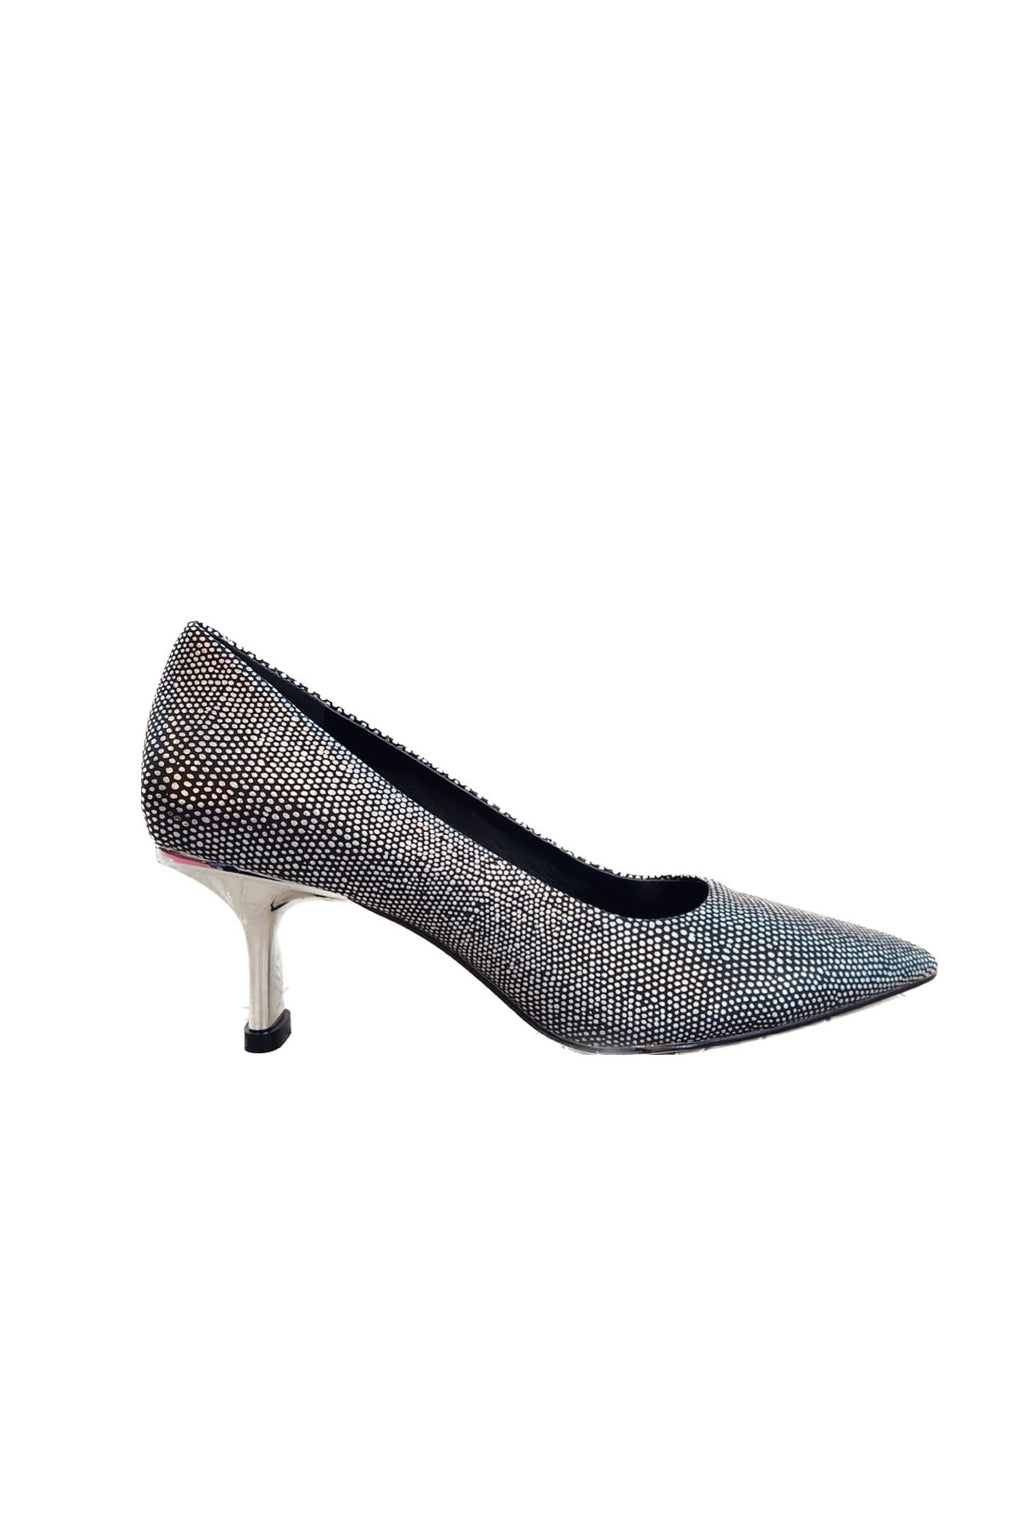 Capelli Rossi silver leather pump medium heel